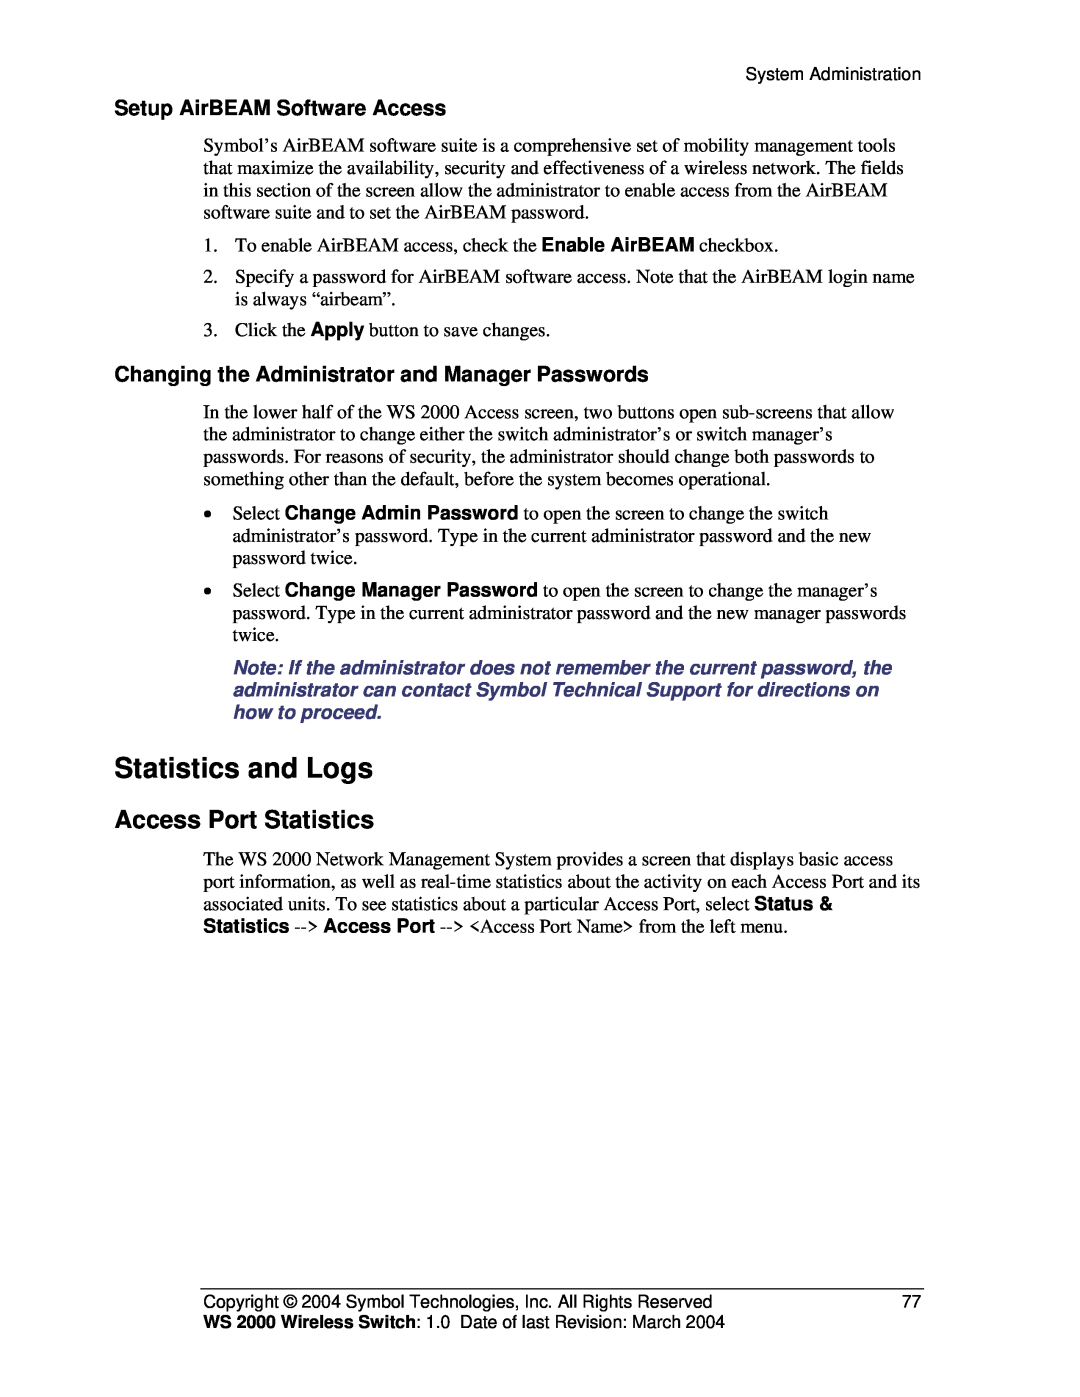 Symbol Technologies WS 2000 manual Statistics and Logs, Access Port Statistics, Setup AirBEAM Software Access 